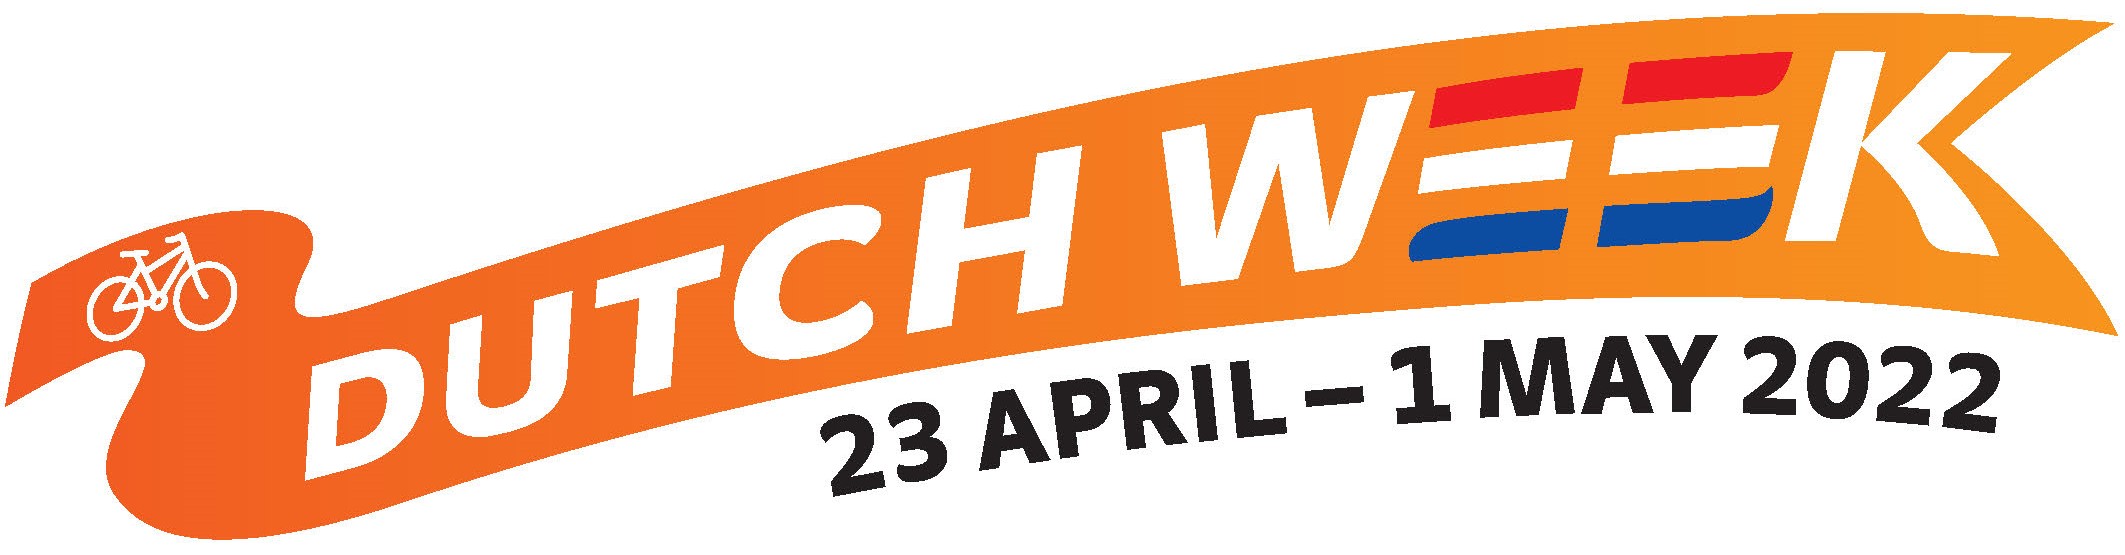 DutchWeek_logo_cropped_2022